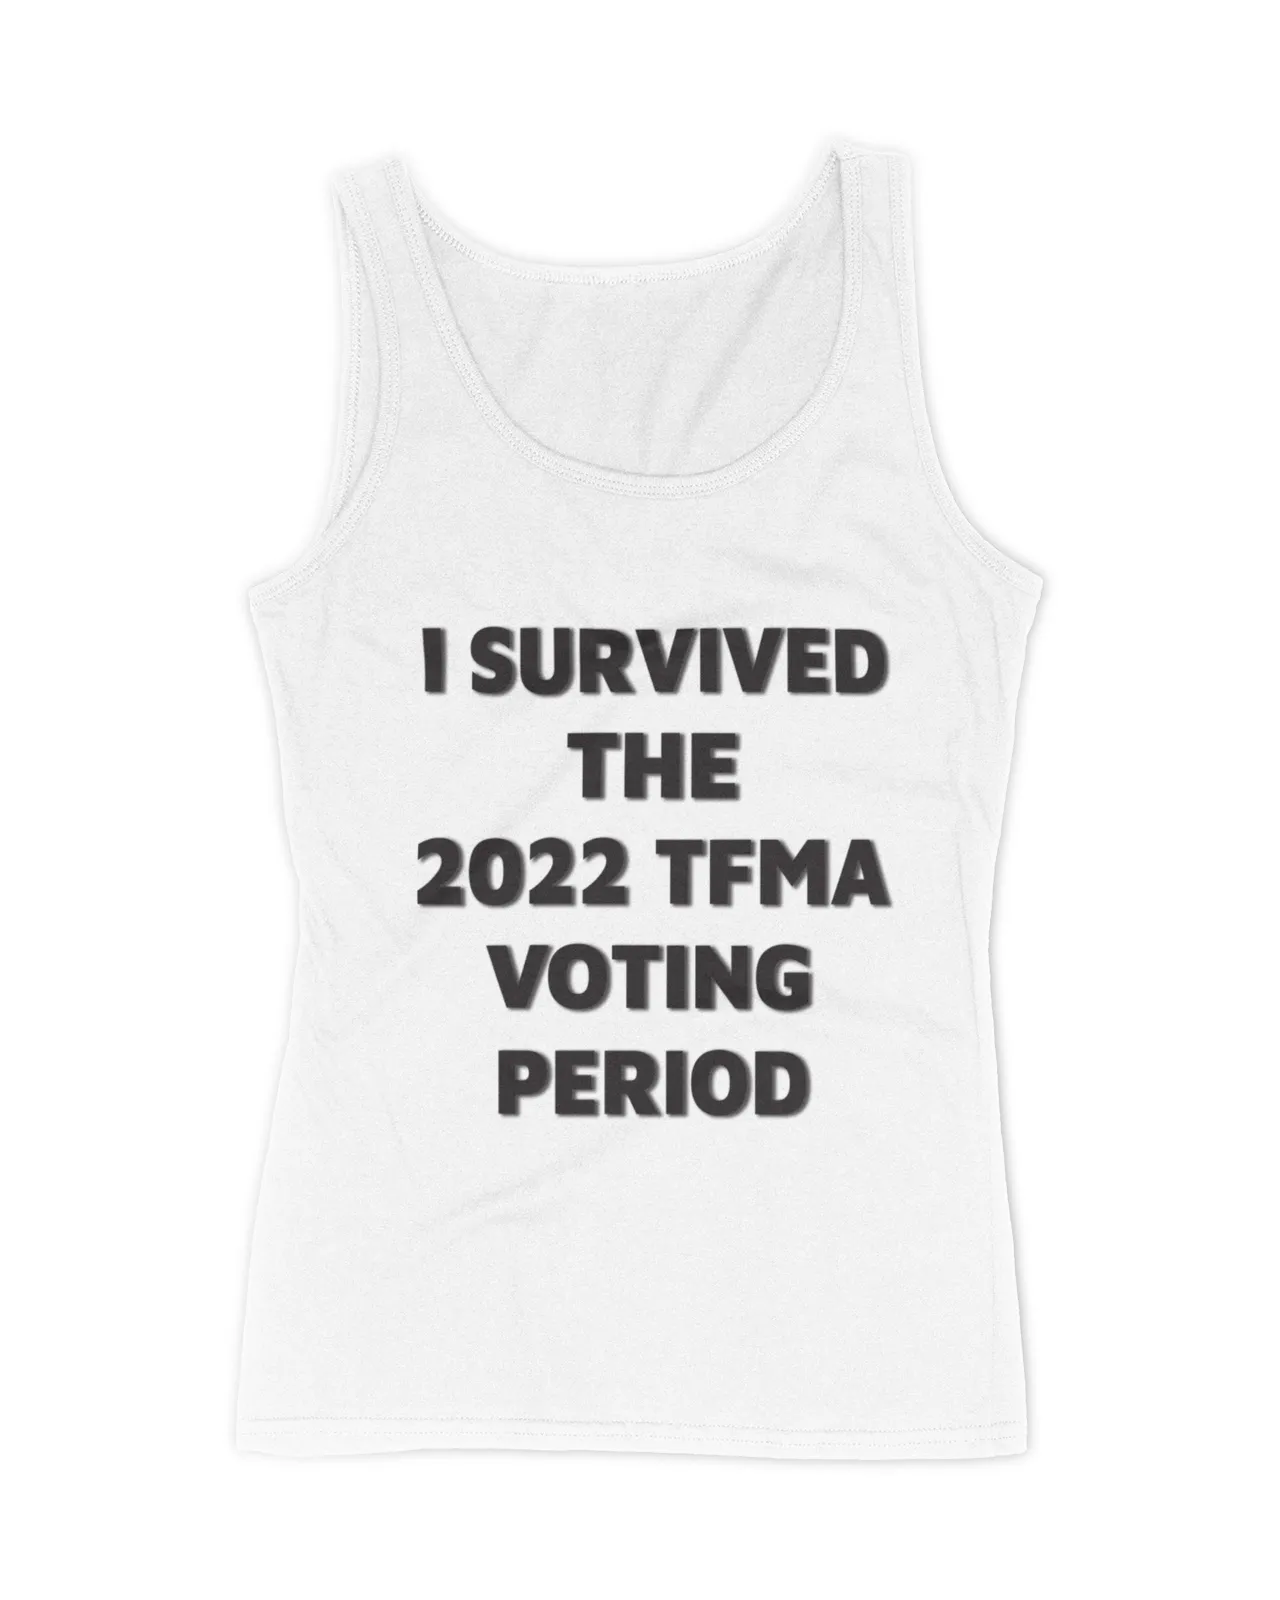 https://senprints.com/vi/i-survived-the-2022-tfma-voting-period?spsid=101692